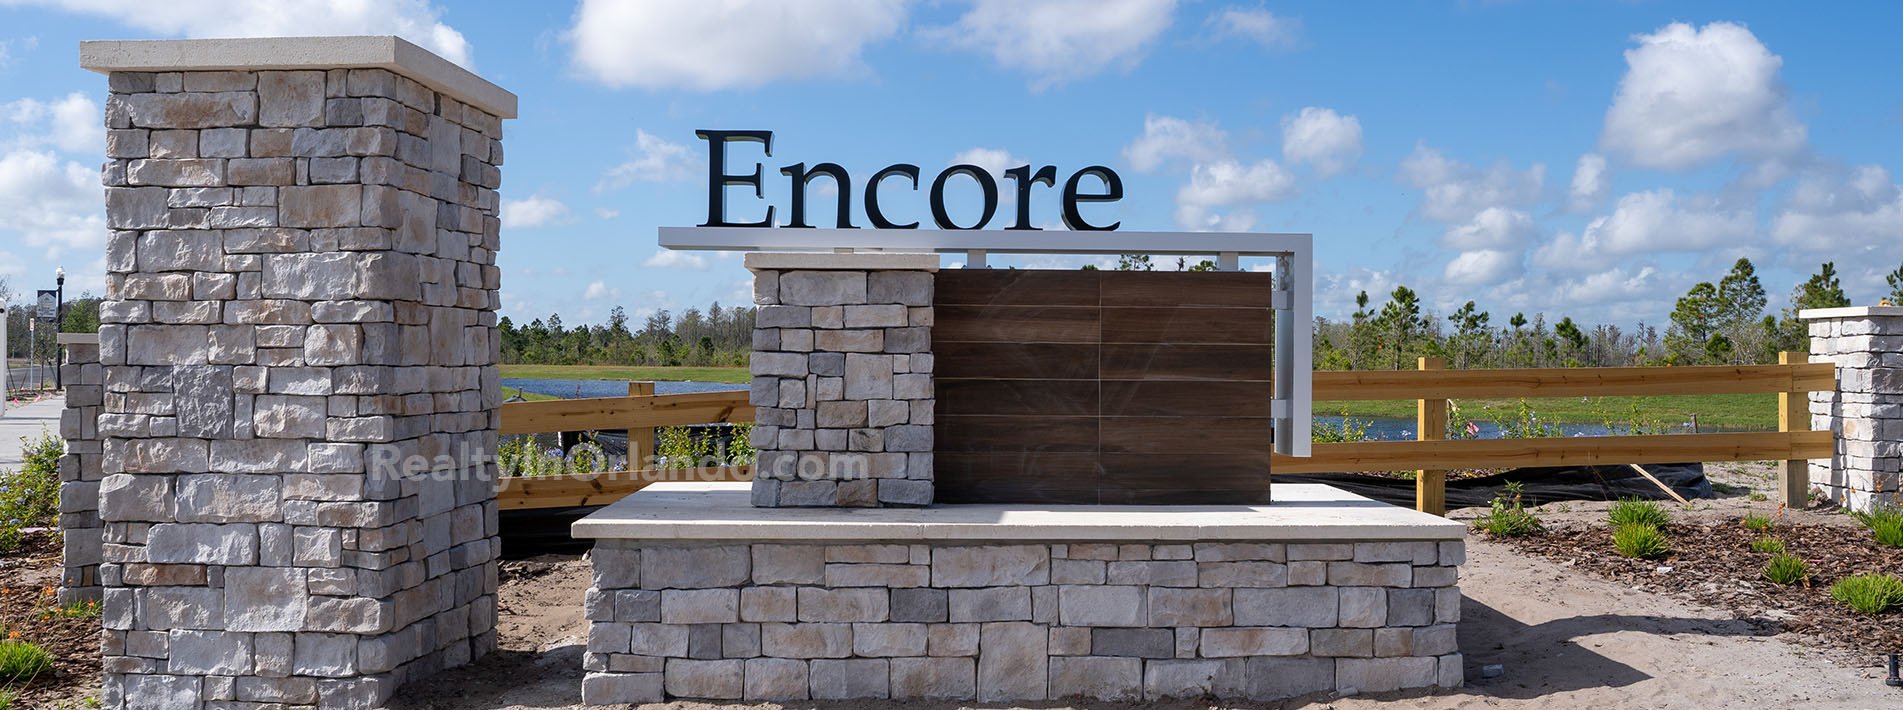 Encore at Ovation Winter Garden Real Estate